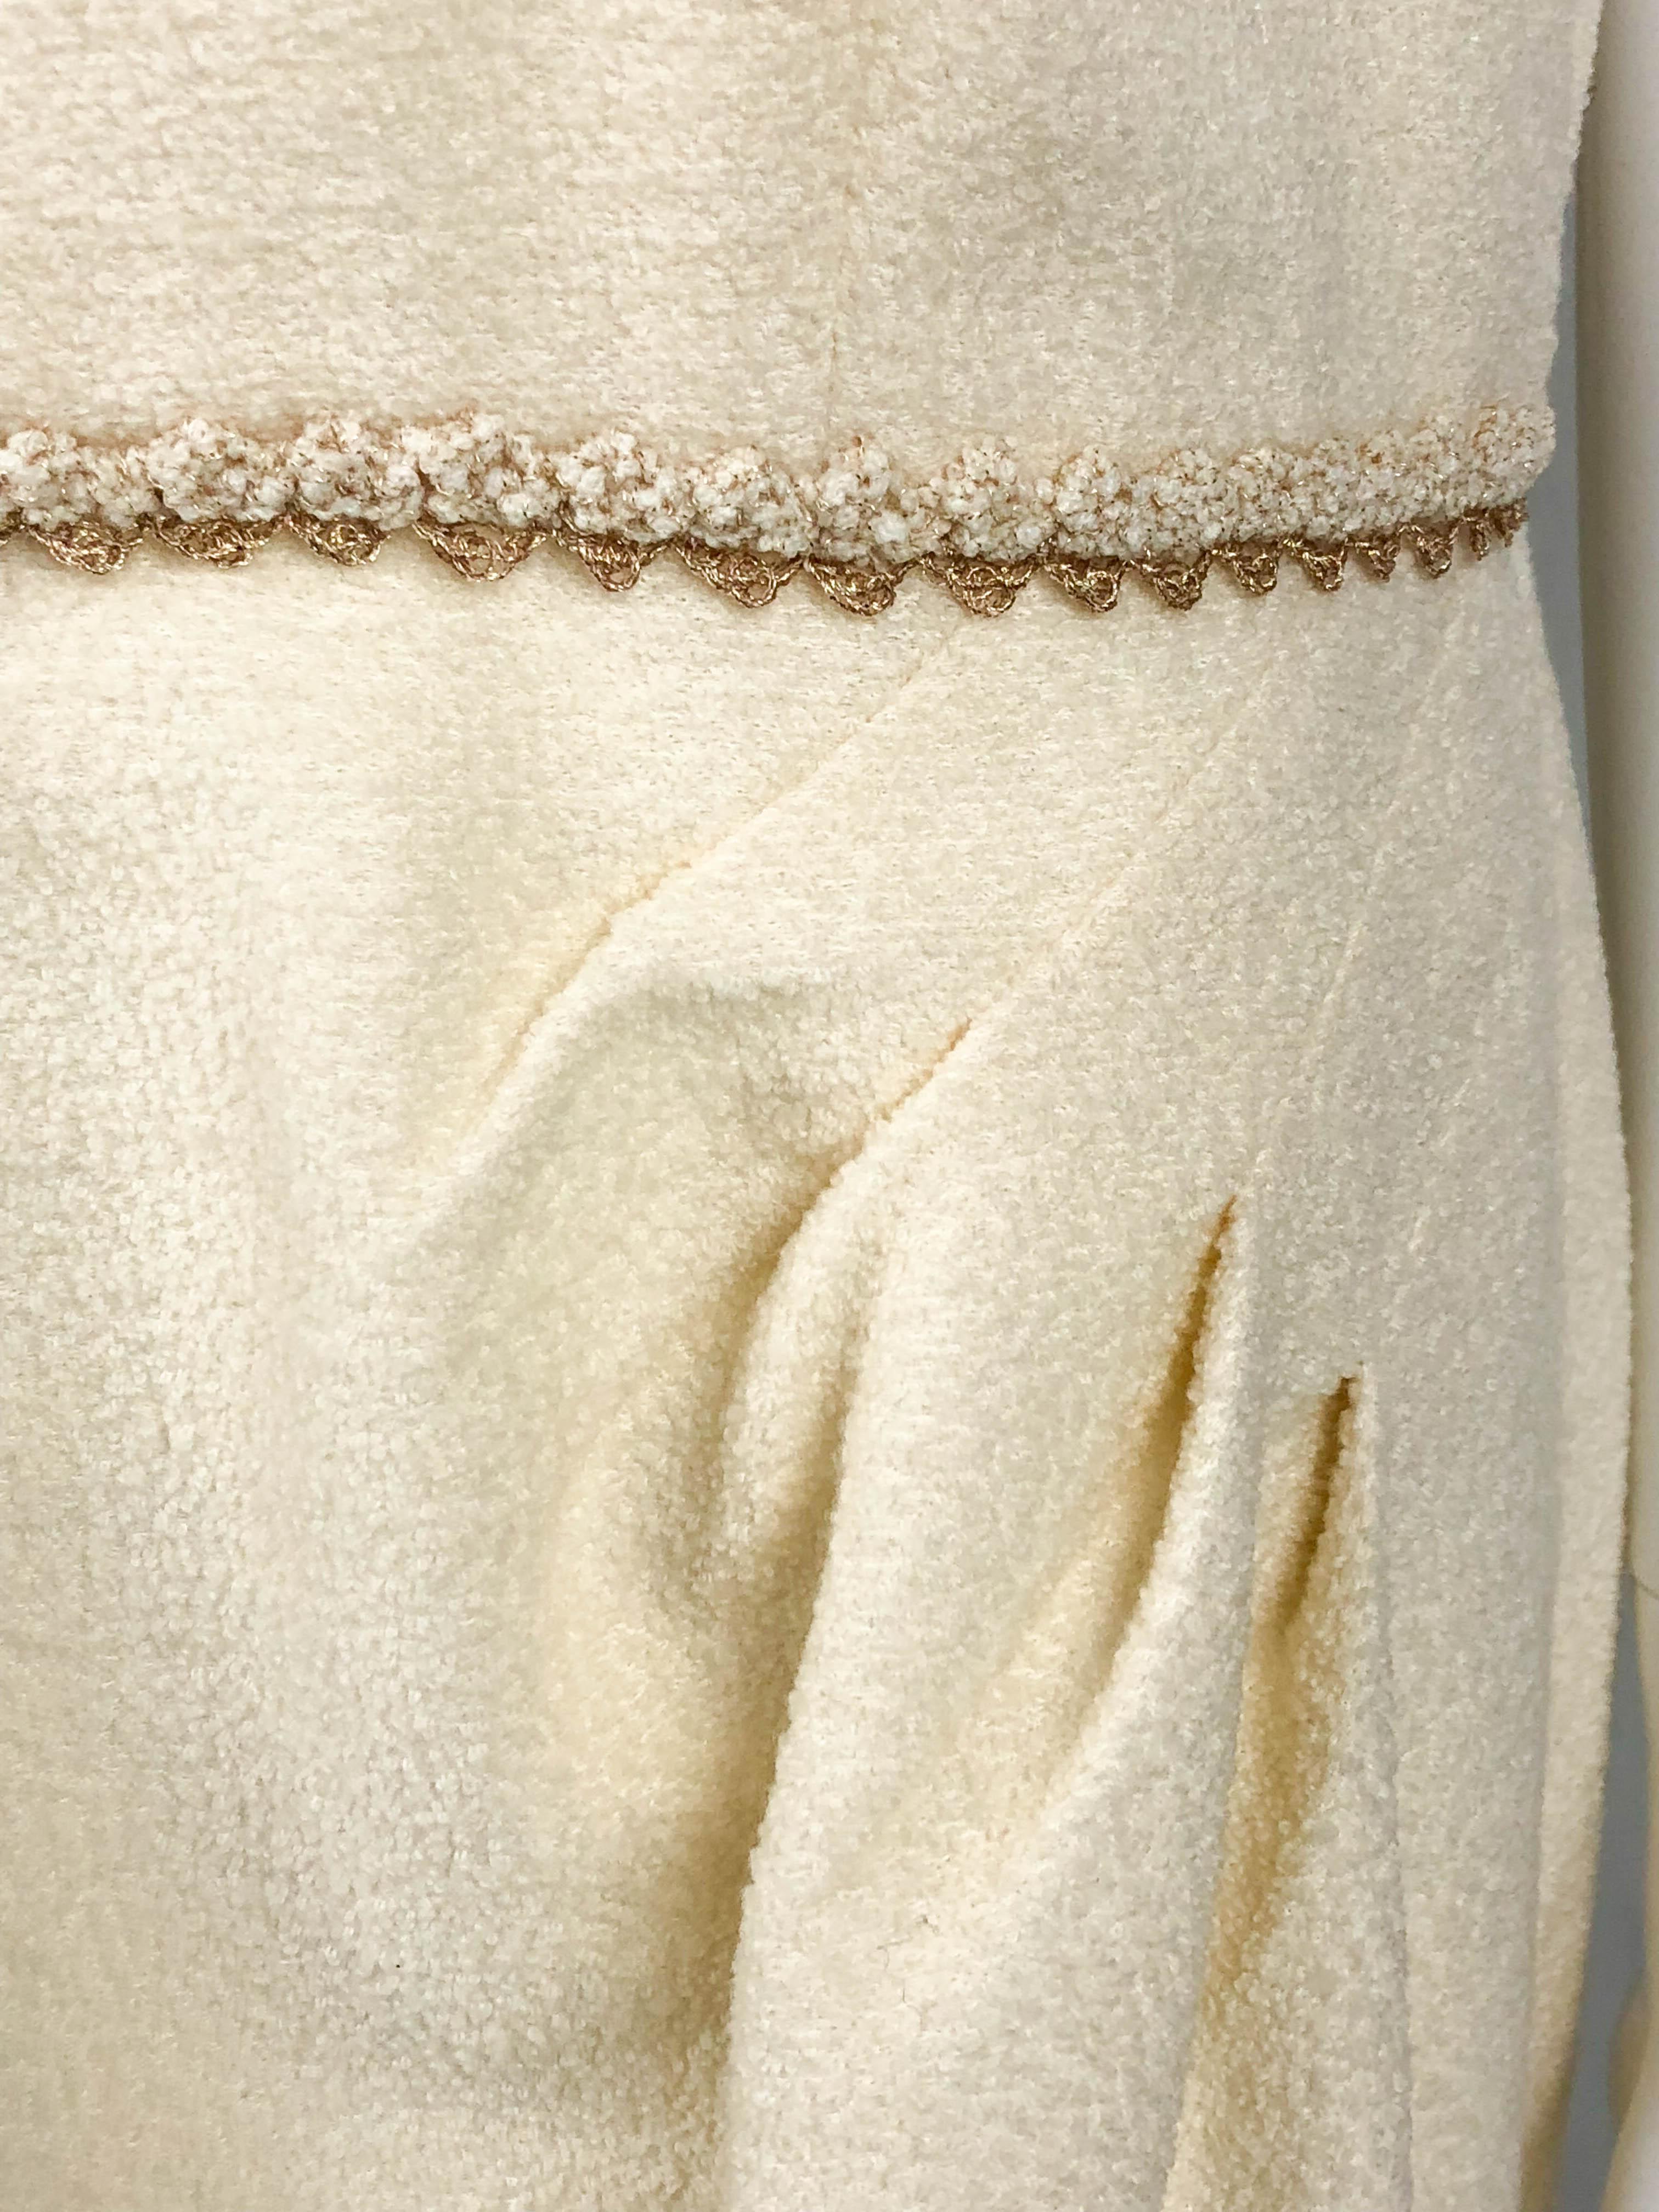 2010 Unworn Chanel Runway Look Cream Dress With Gold Thread Trim For Sale 6